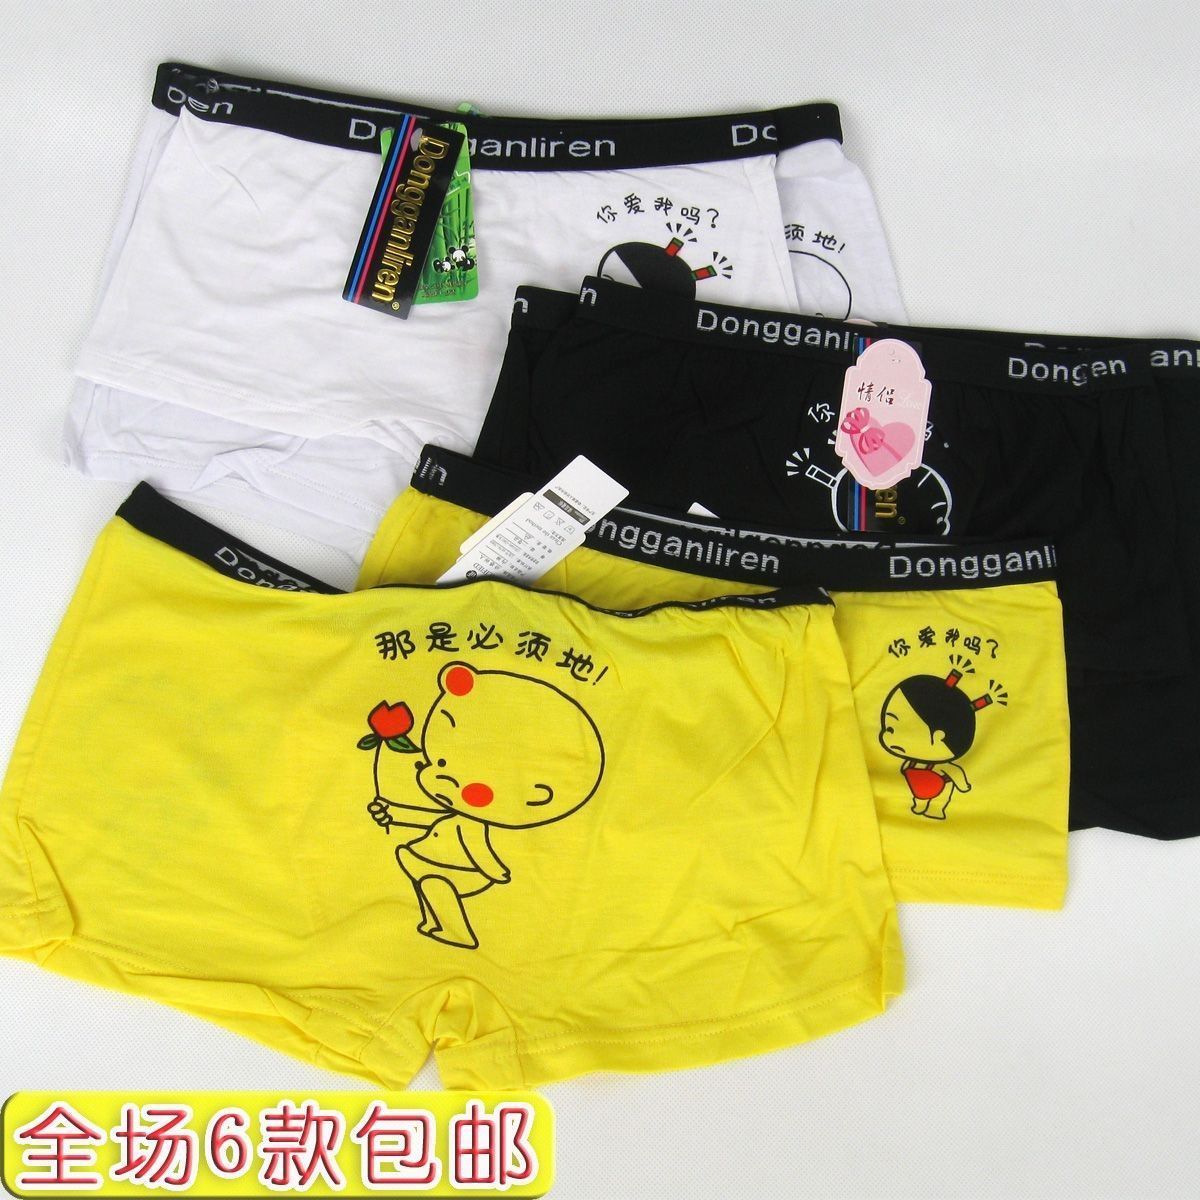 2013 527 # got picking bamboo fiber underwear cartoon style "women 's men' s boxer